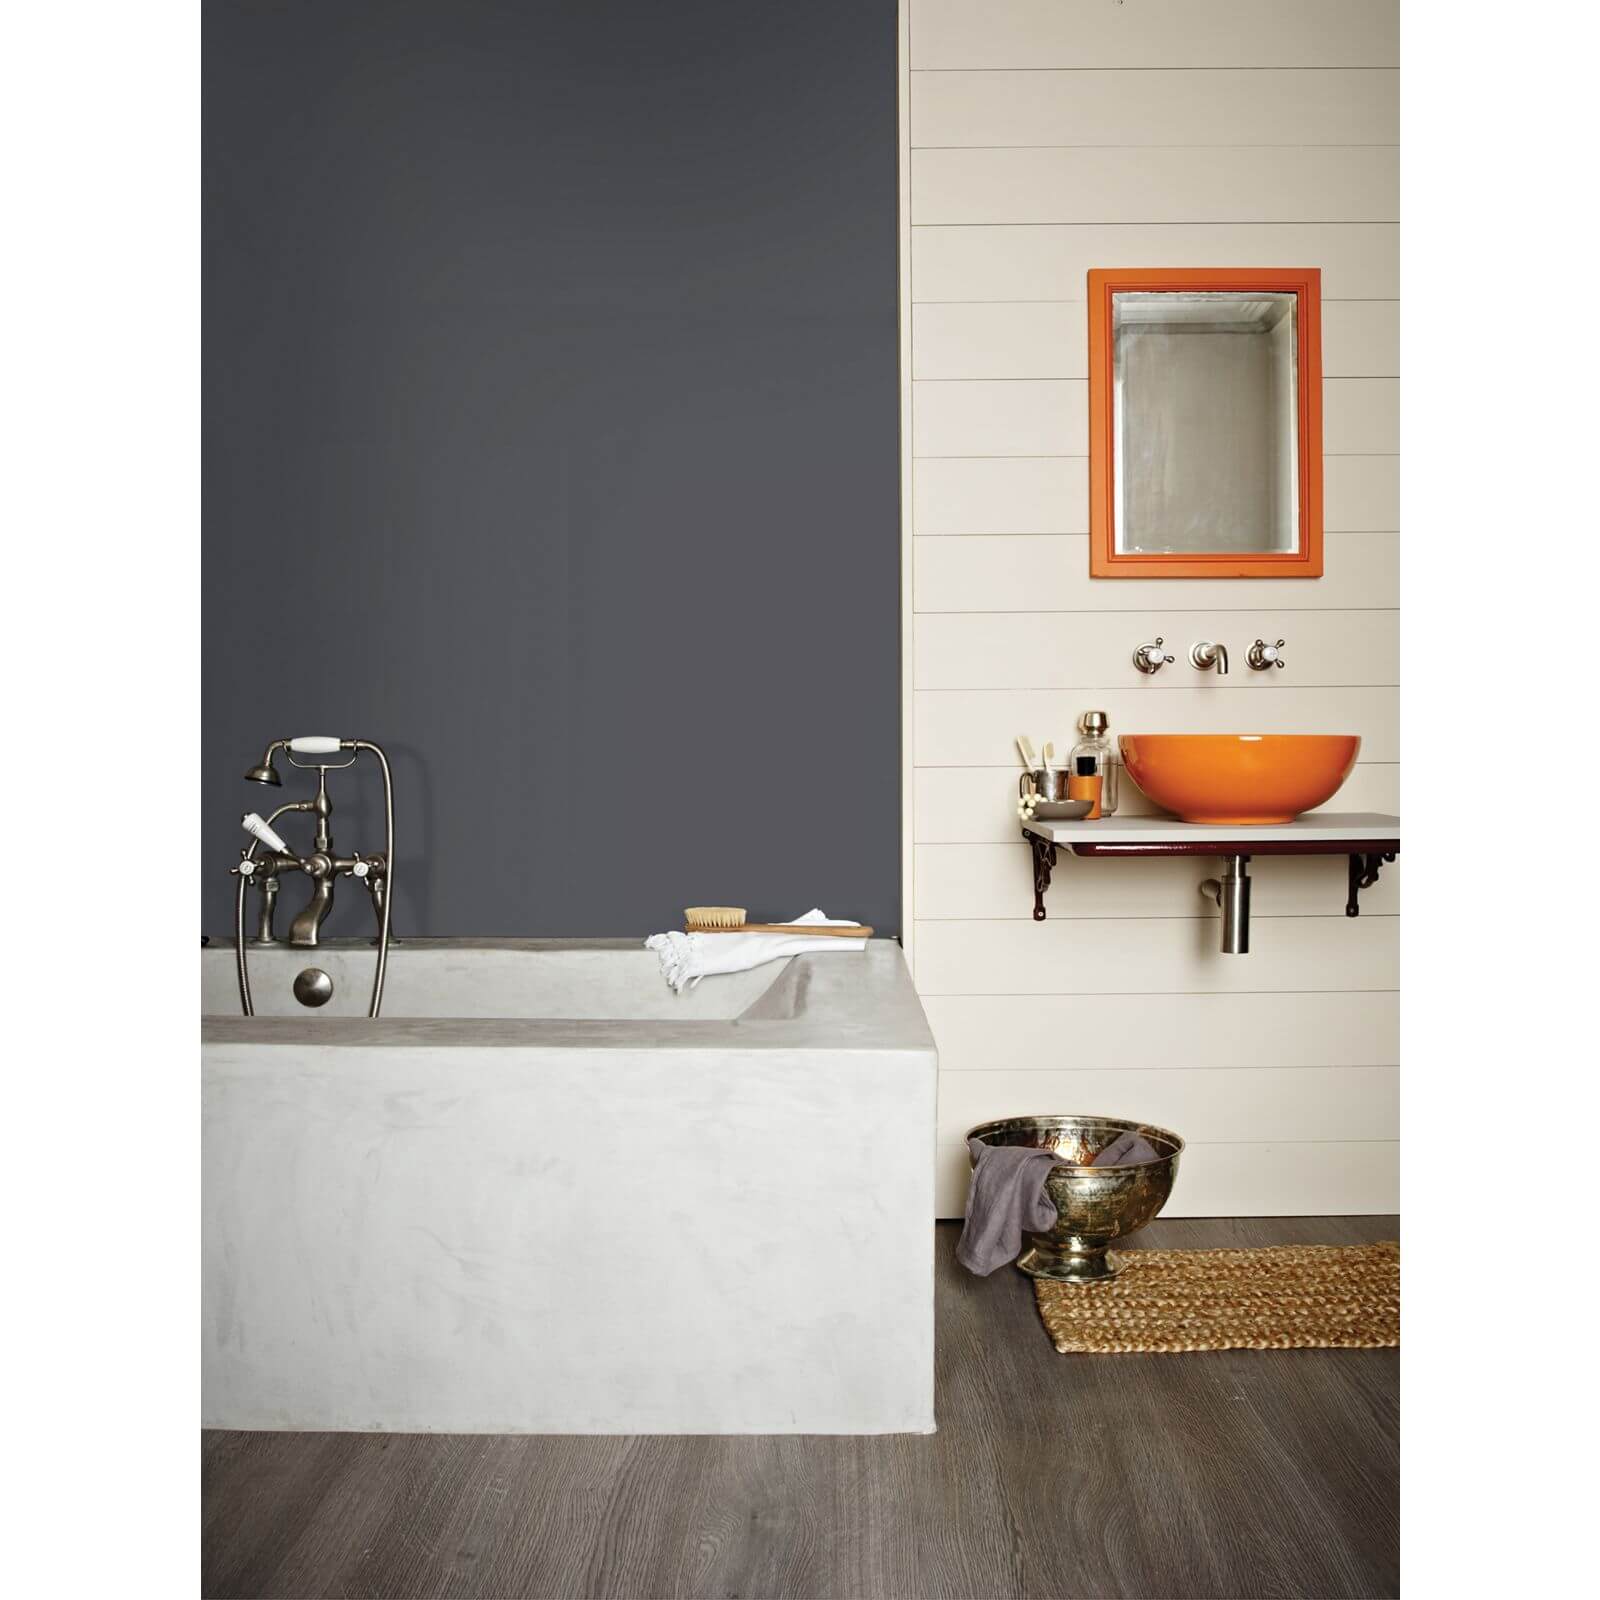 Crown Breatheasy Bathroom -  Tin Bath -  Mid Sheen Paint -  2.5L